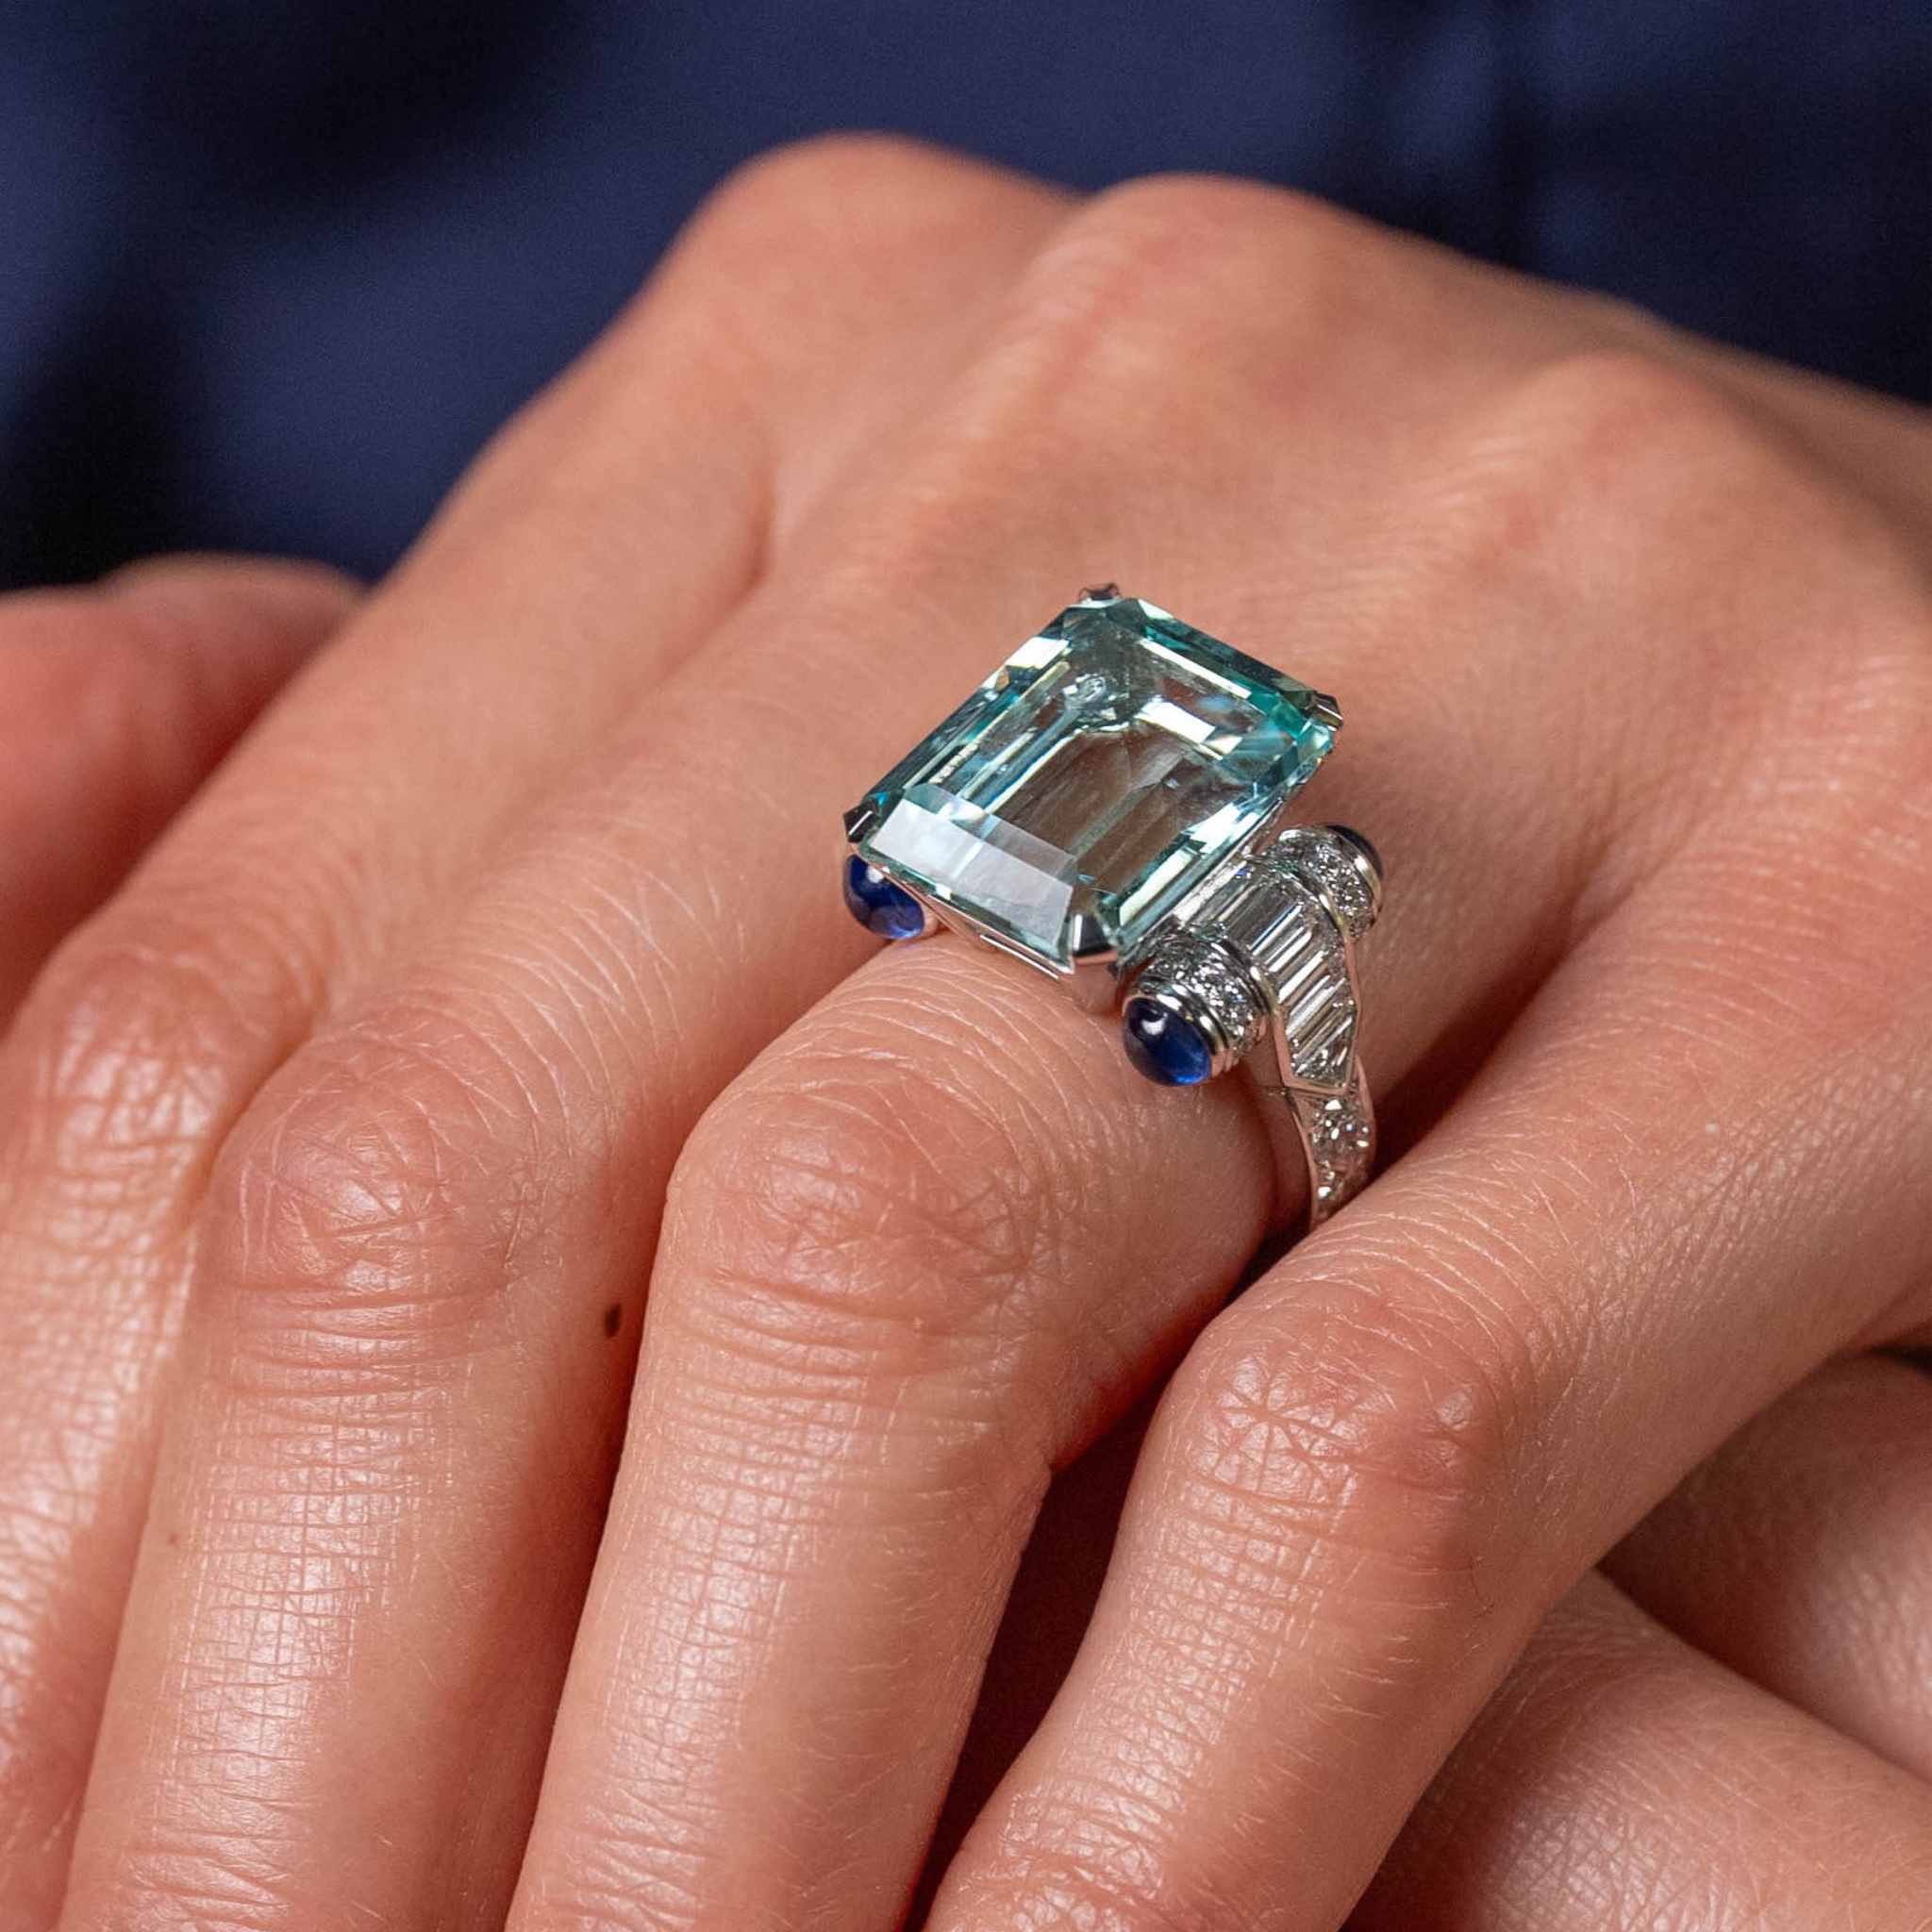 Phenomenal 20.37 Carat Emerald Cut Aquamarine Gemstone Women's Engagement  Ring | eBay